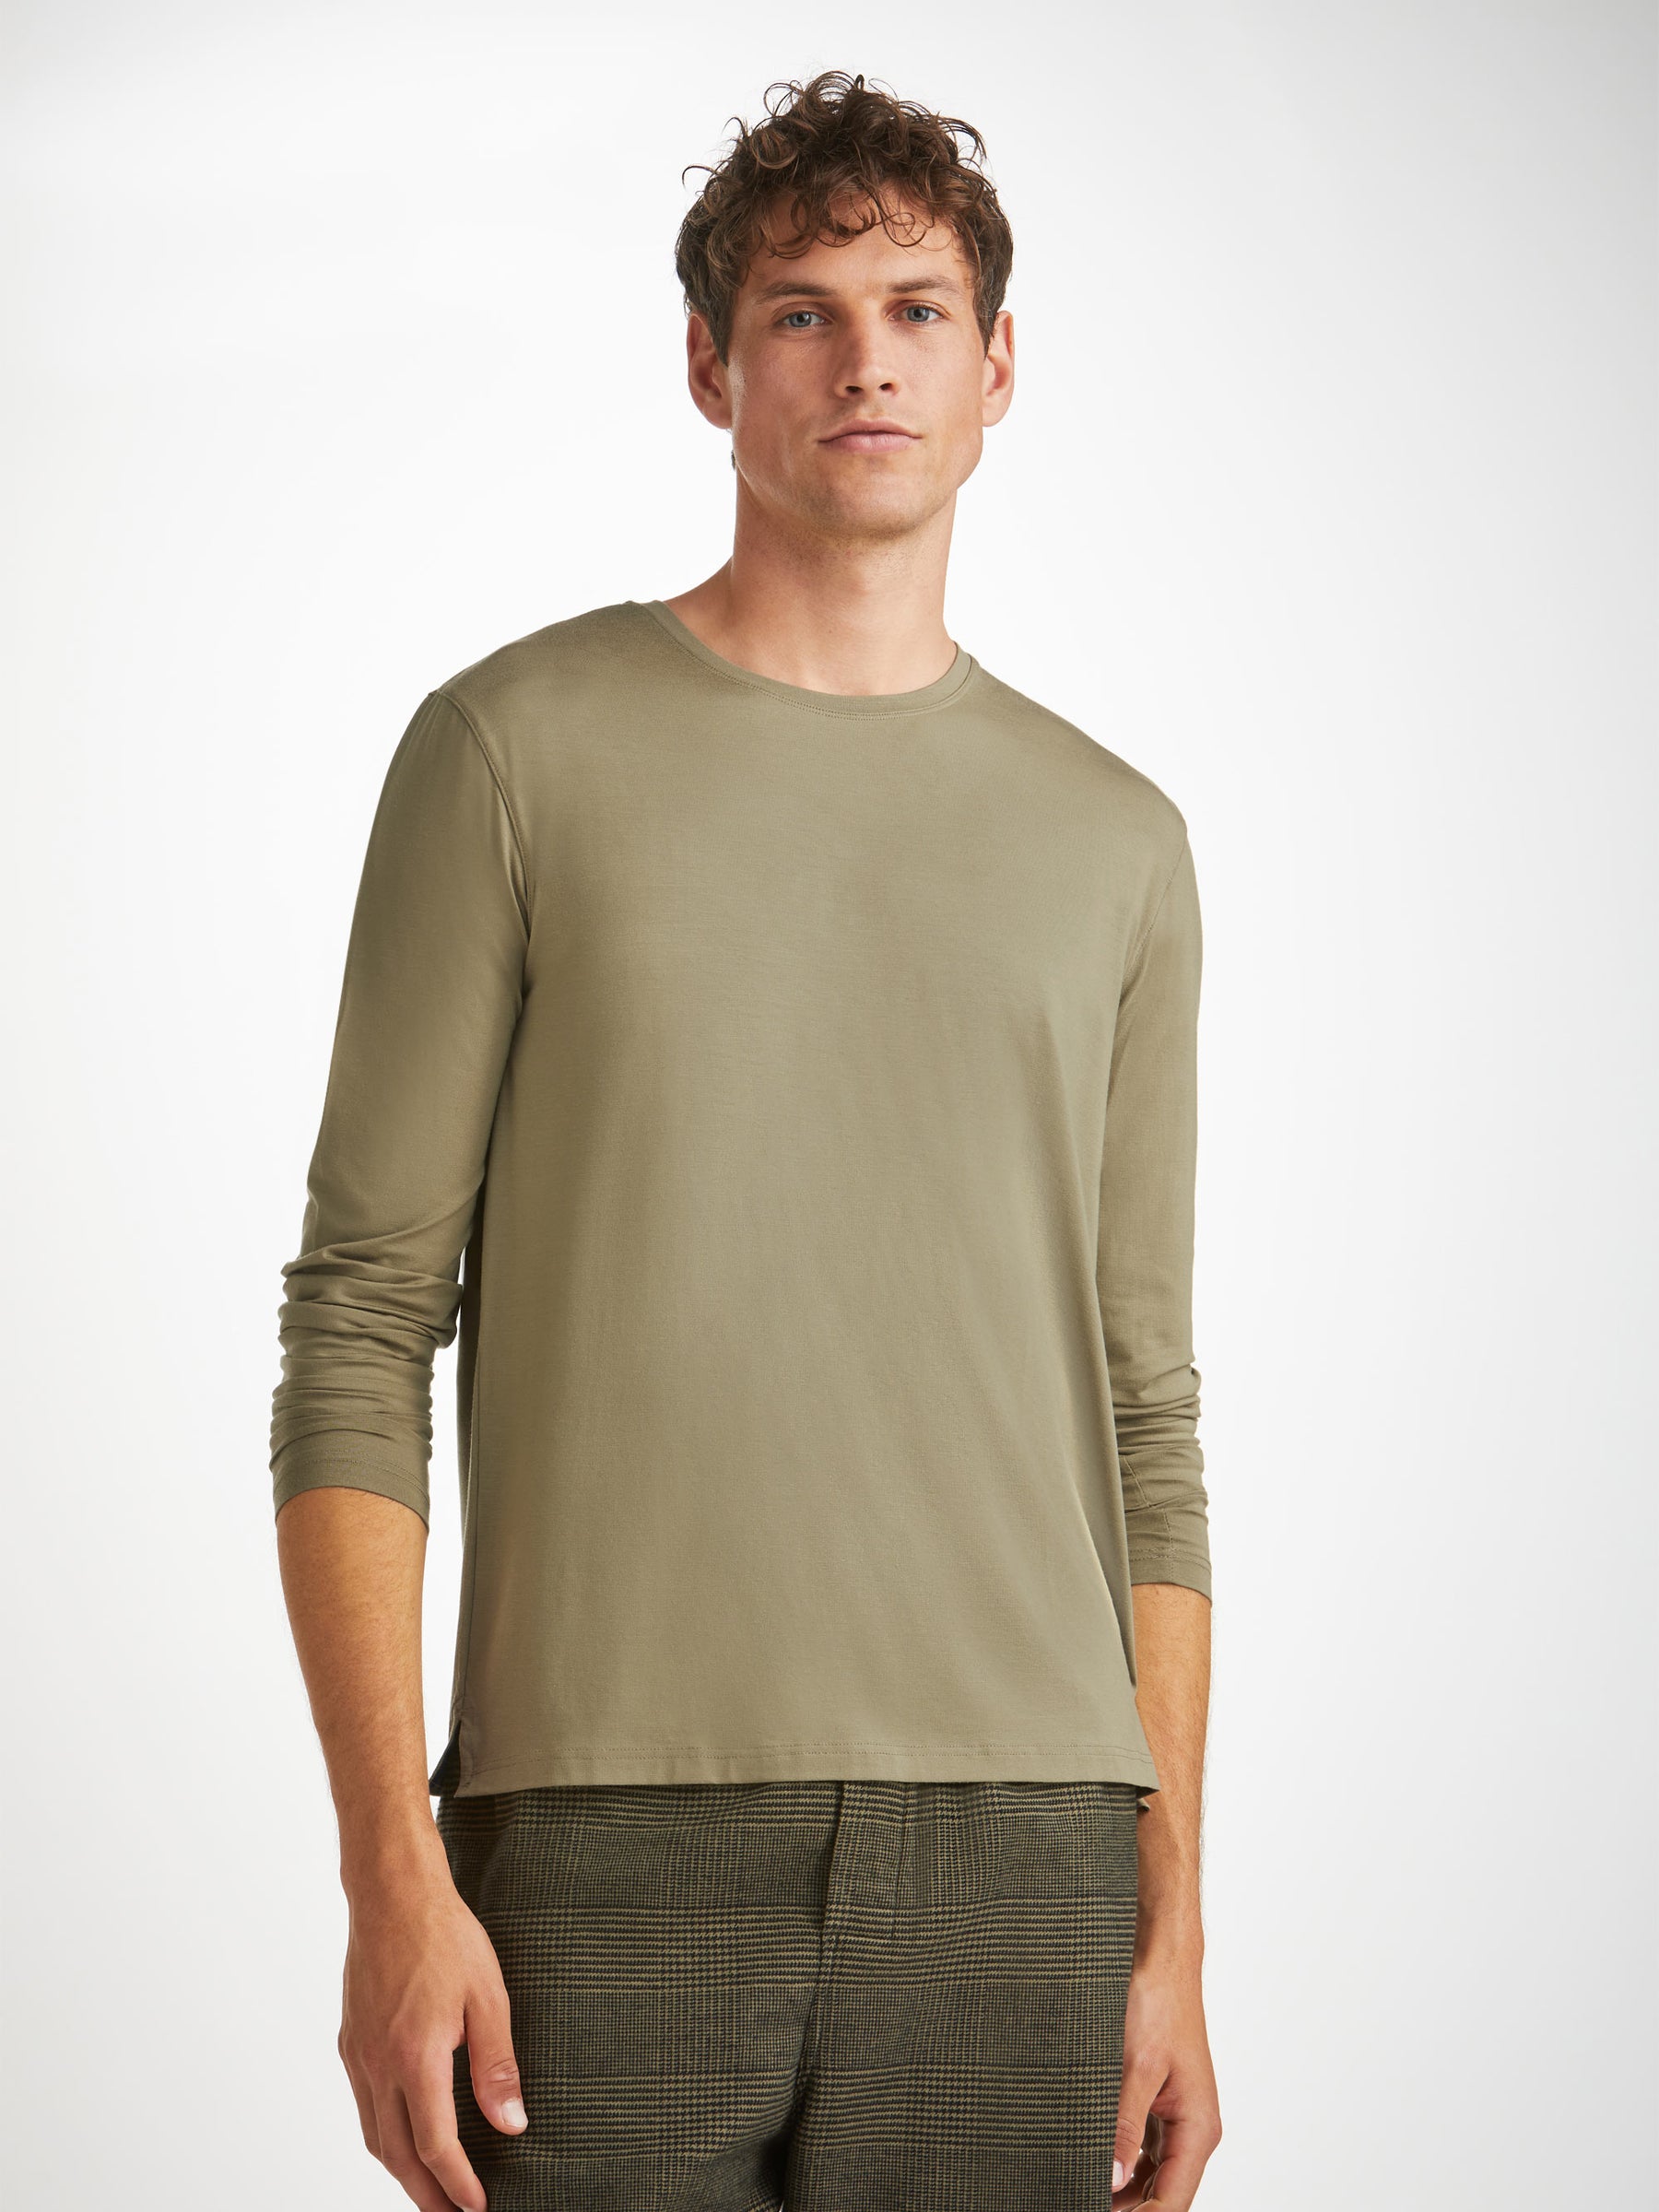 Men's Long Sleeve T-Shirt Basel Micro Modal Stretch Khaki